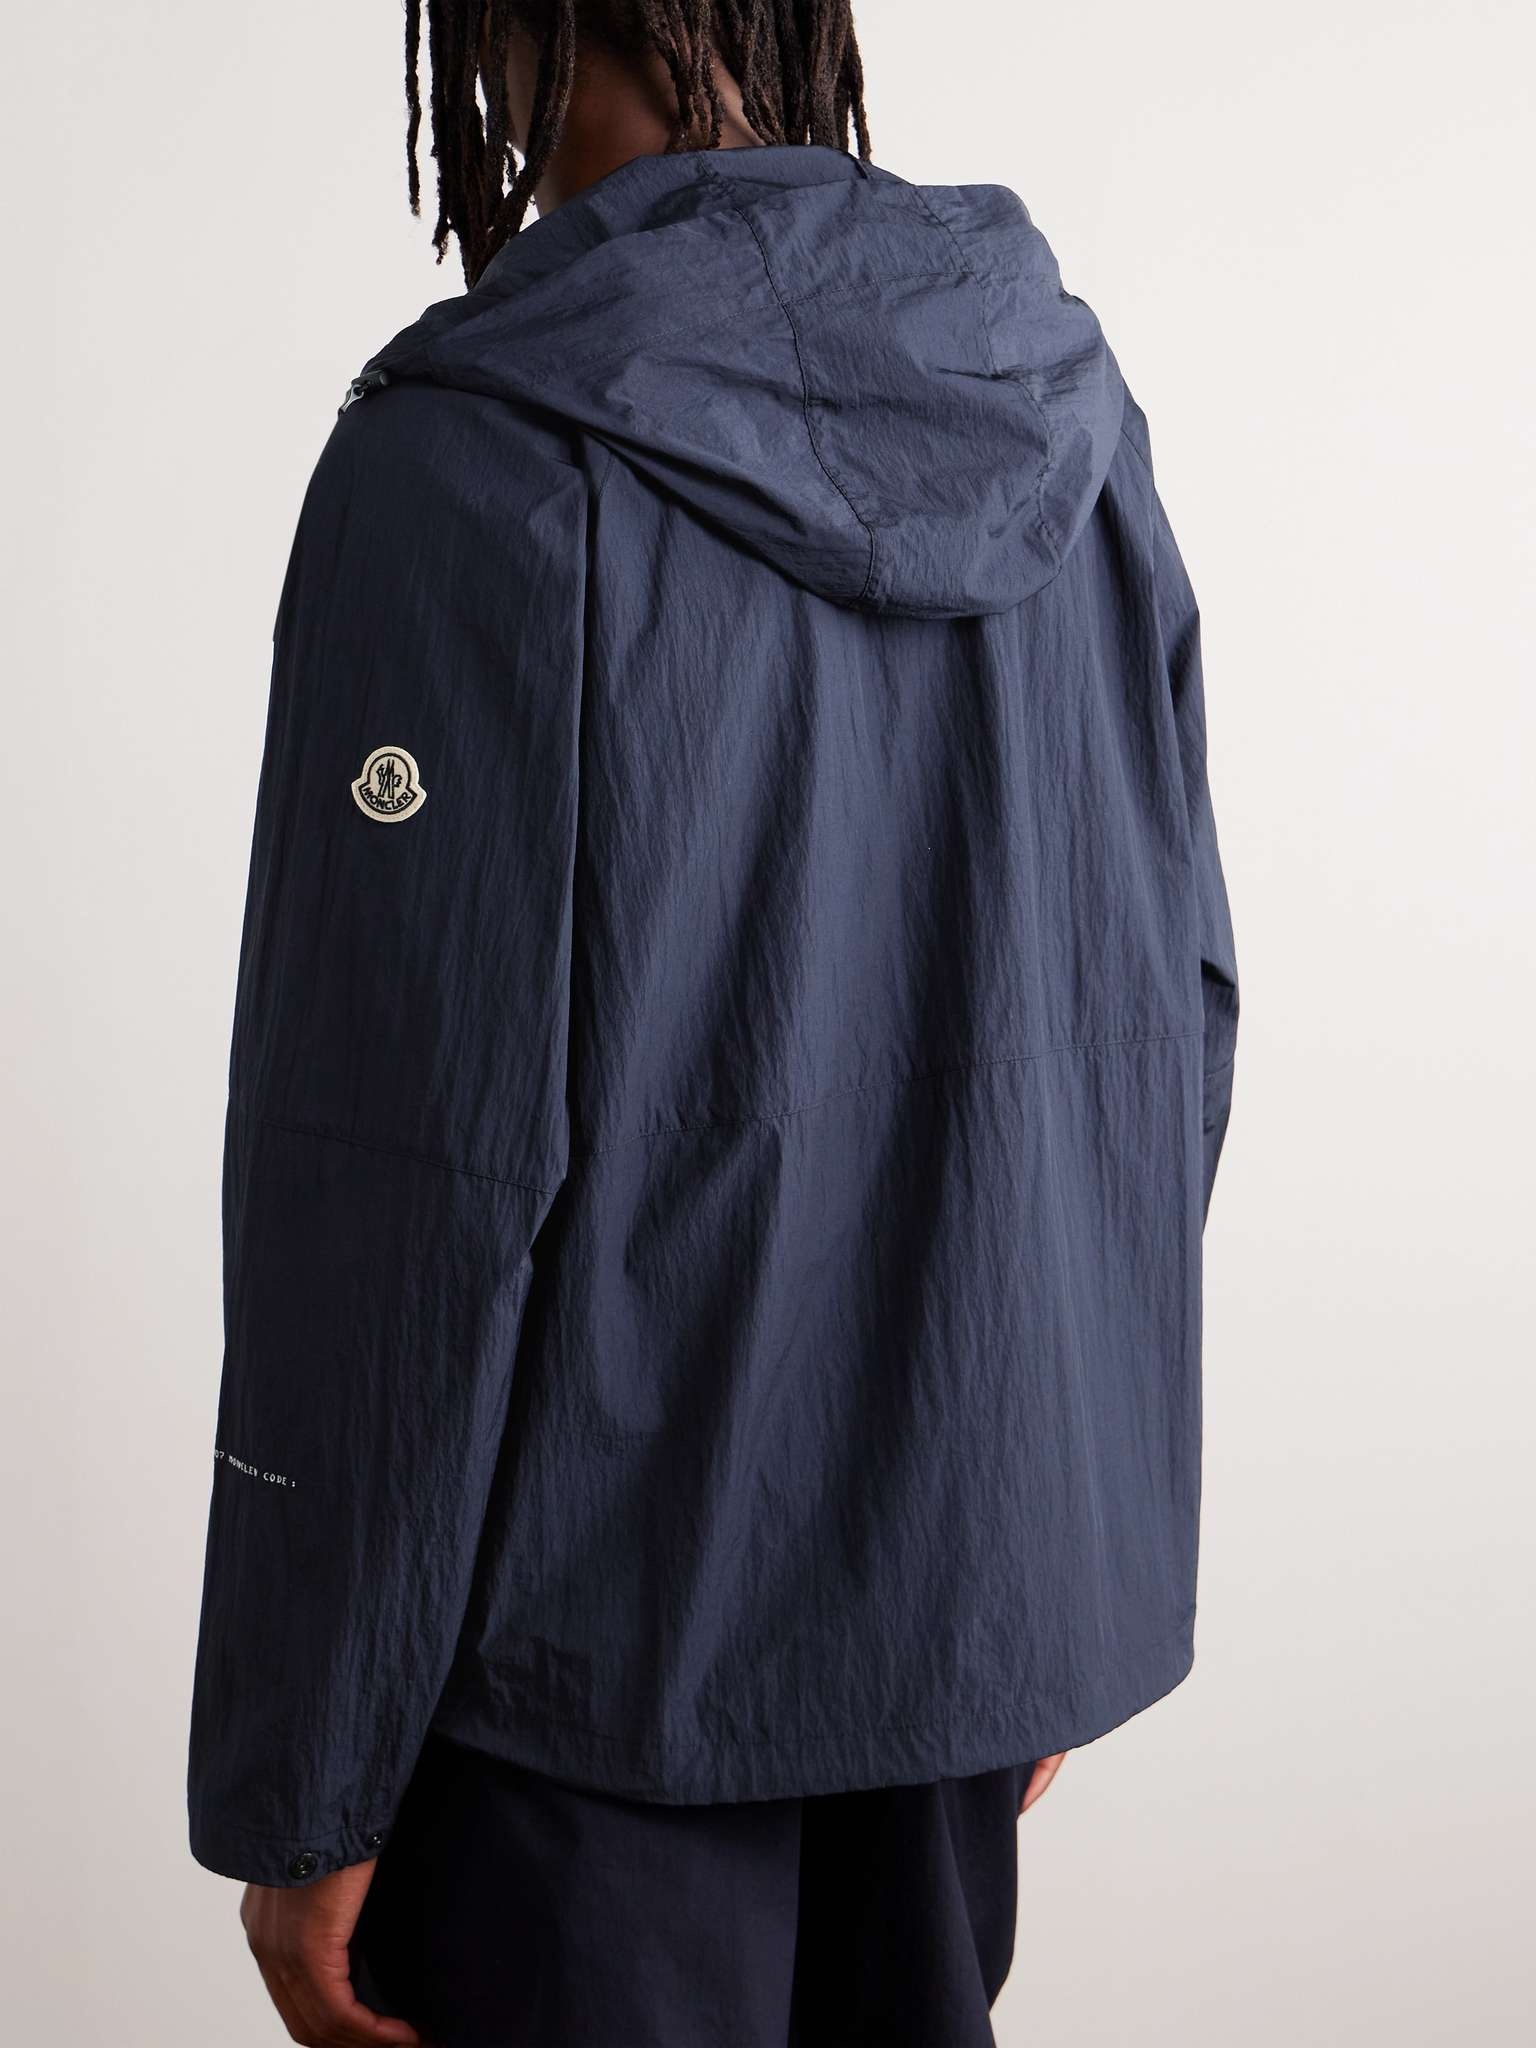 7 Moncler FRGMT Hiroshi Fujiwara Dotter Crinkled-Shell Hooded Jacket